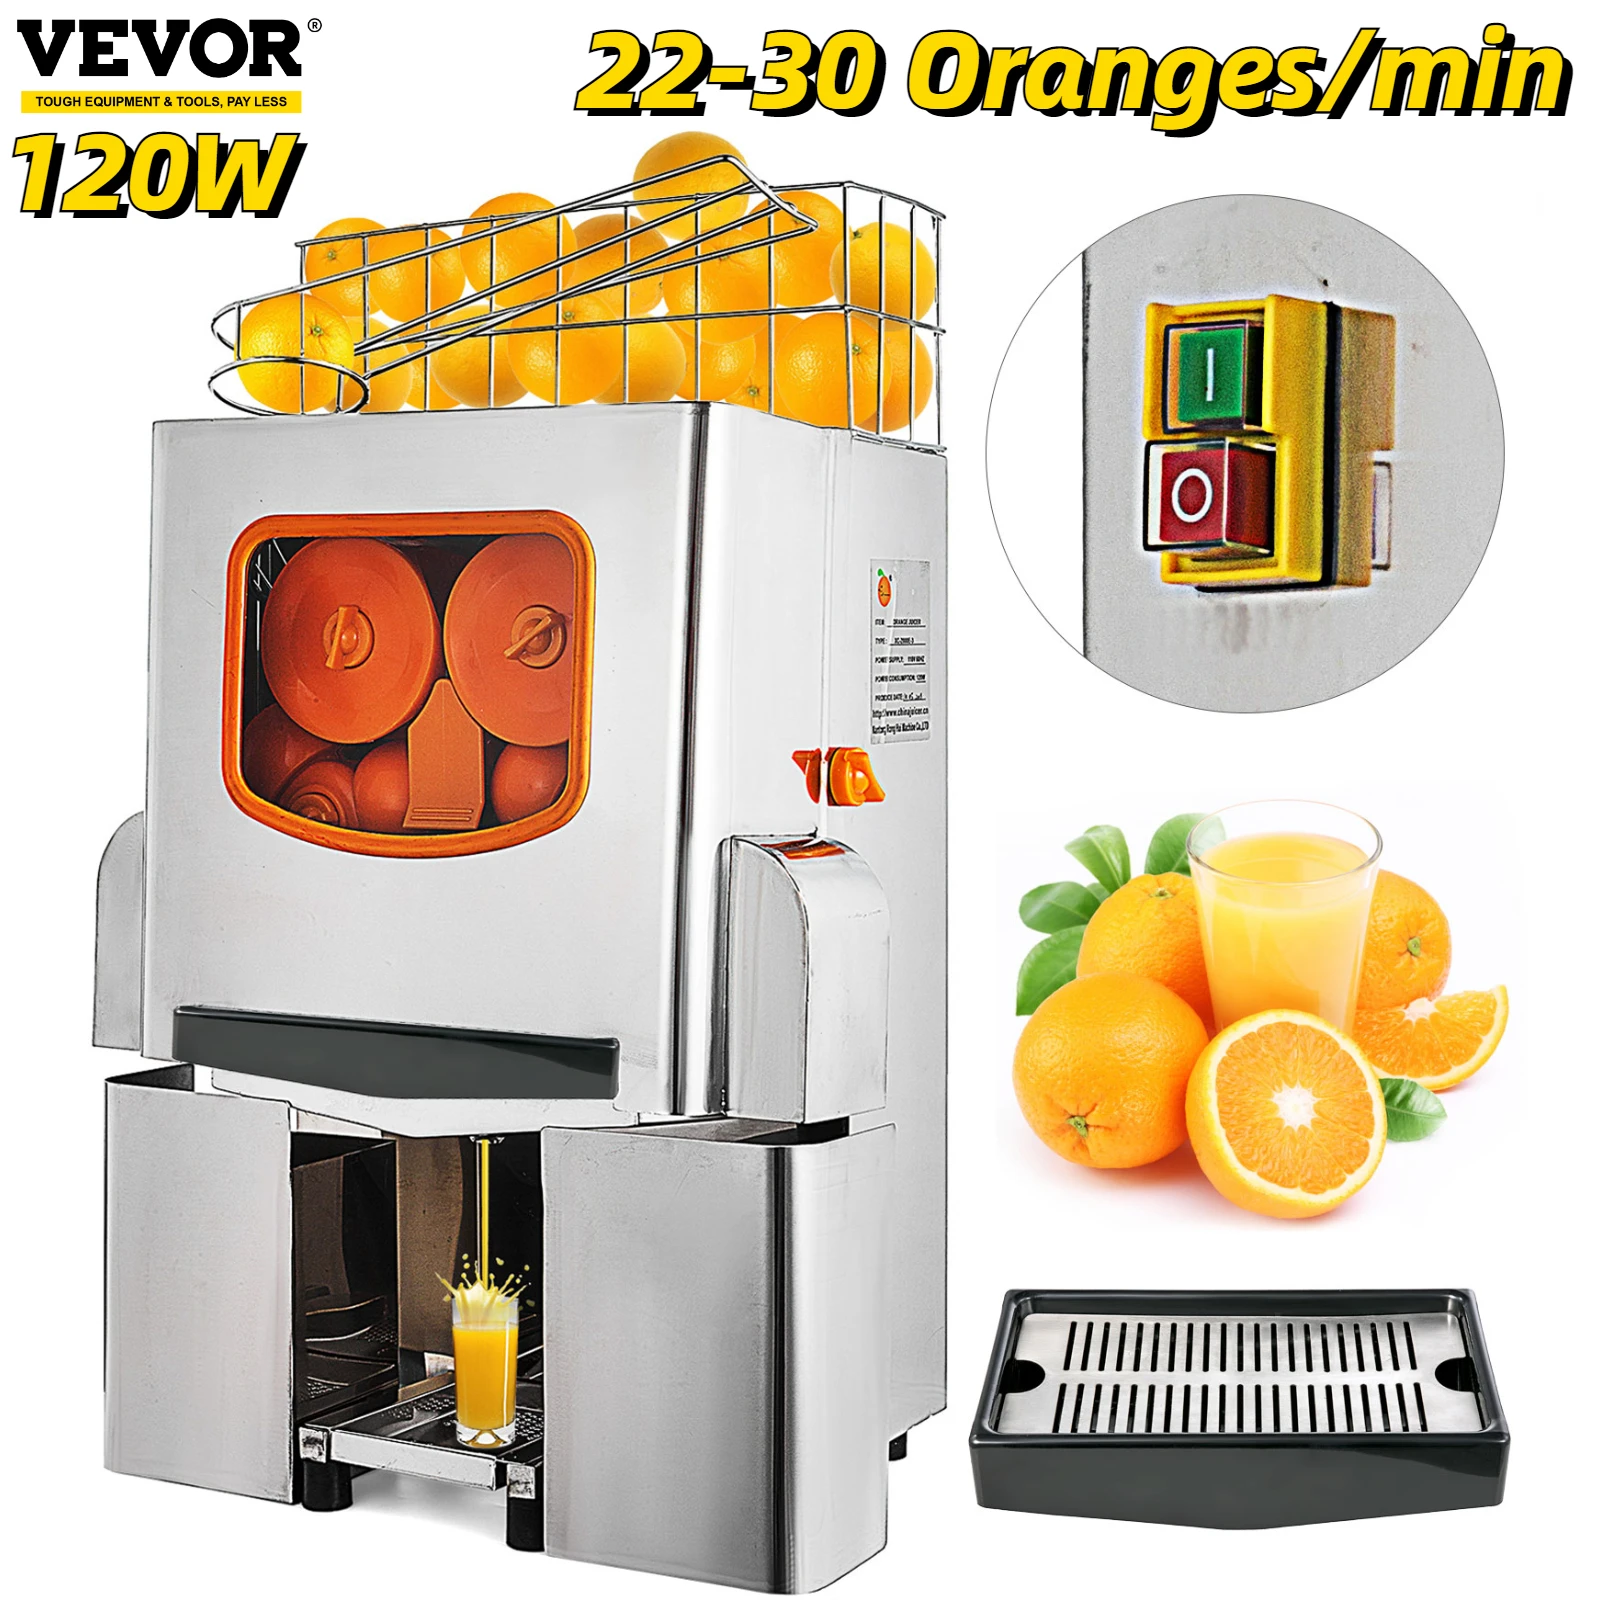 Vevor 120w extratores de espremedor laranja elétrico 22 30 pcs/min  automático comercial espremedor de suco fresco espremedor de citrinos  exprimidor|Espremedores| - AliExpress